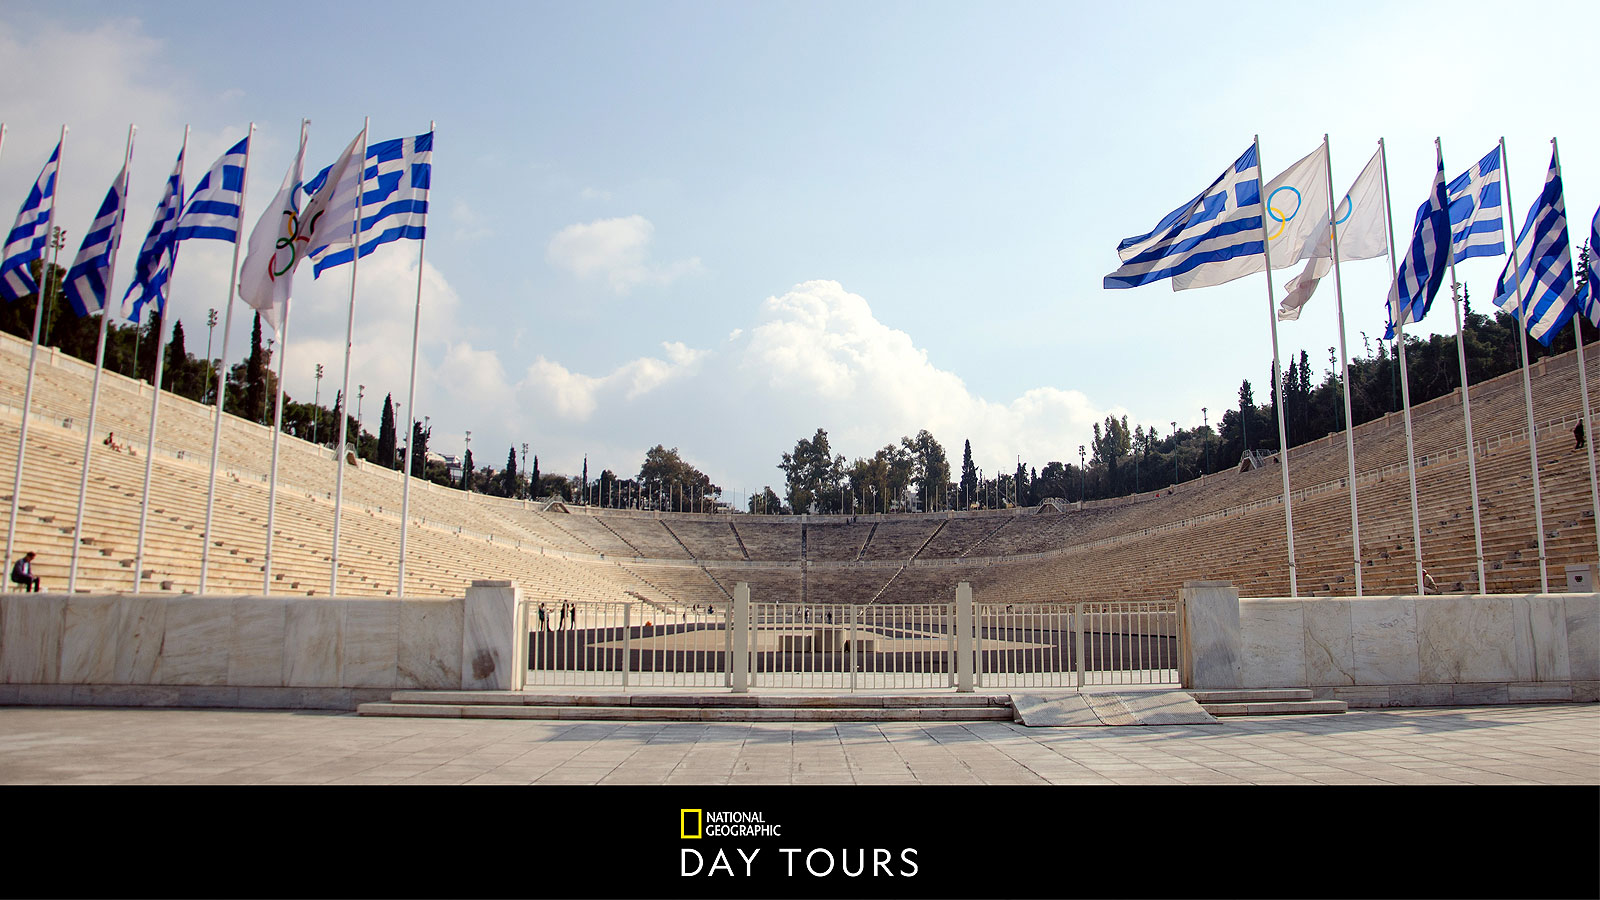 Celestyal: Nέες ημερήσιες εκδρομές “National Geographic Day Tours” σε Αθήνα και Ρόδο